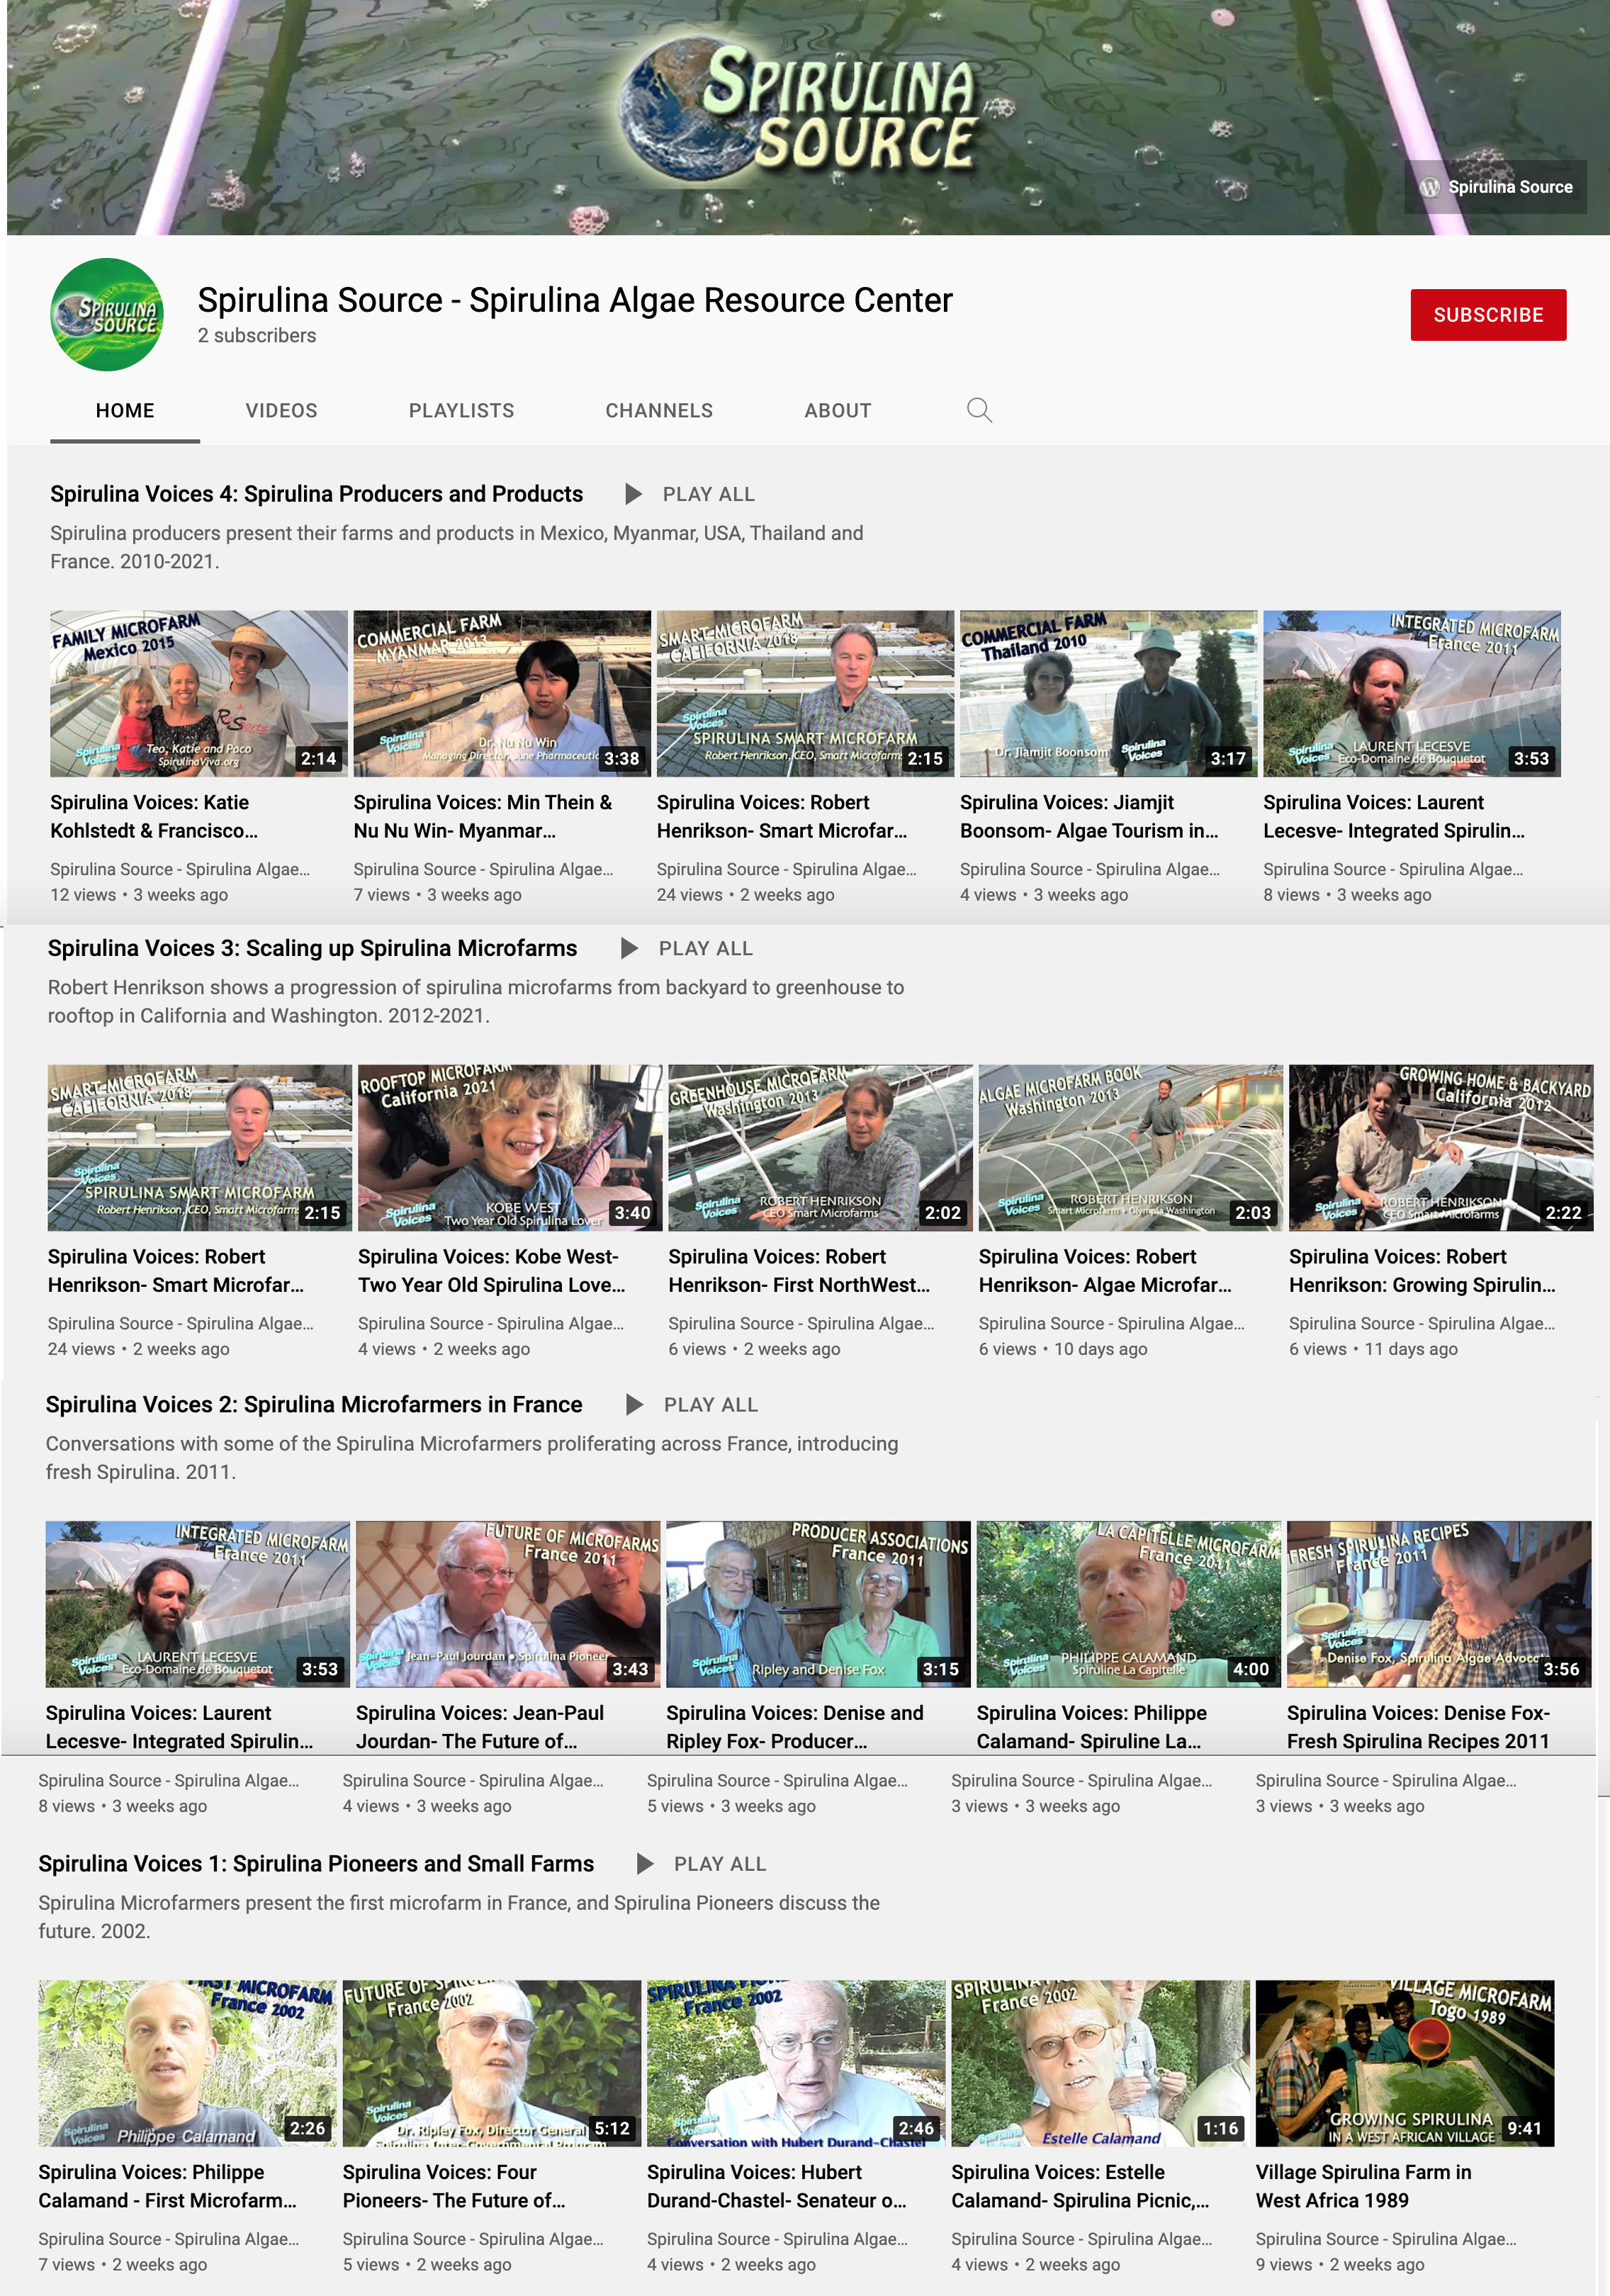 Spirulina Voices Youtube Channel